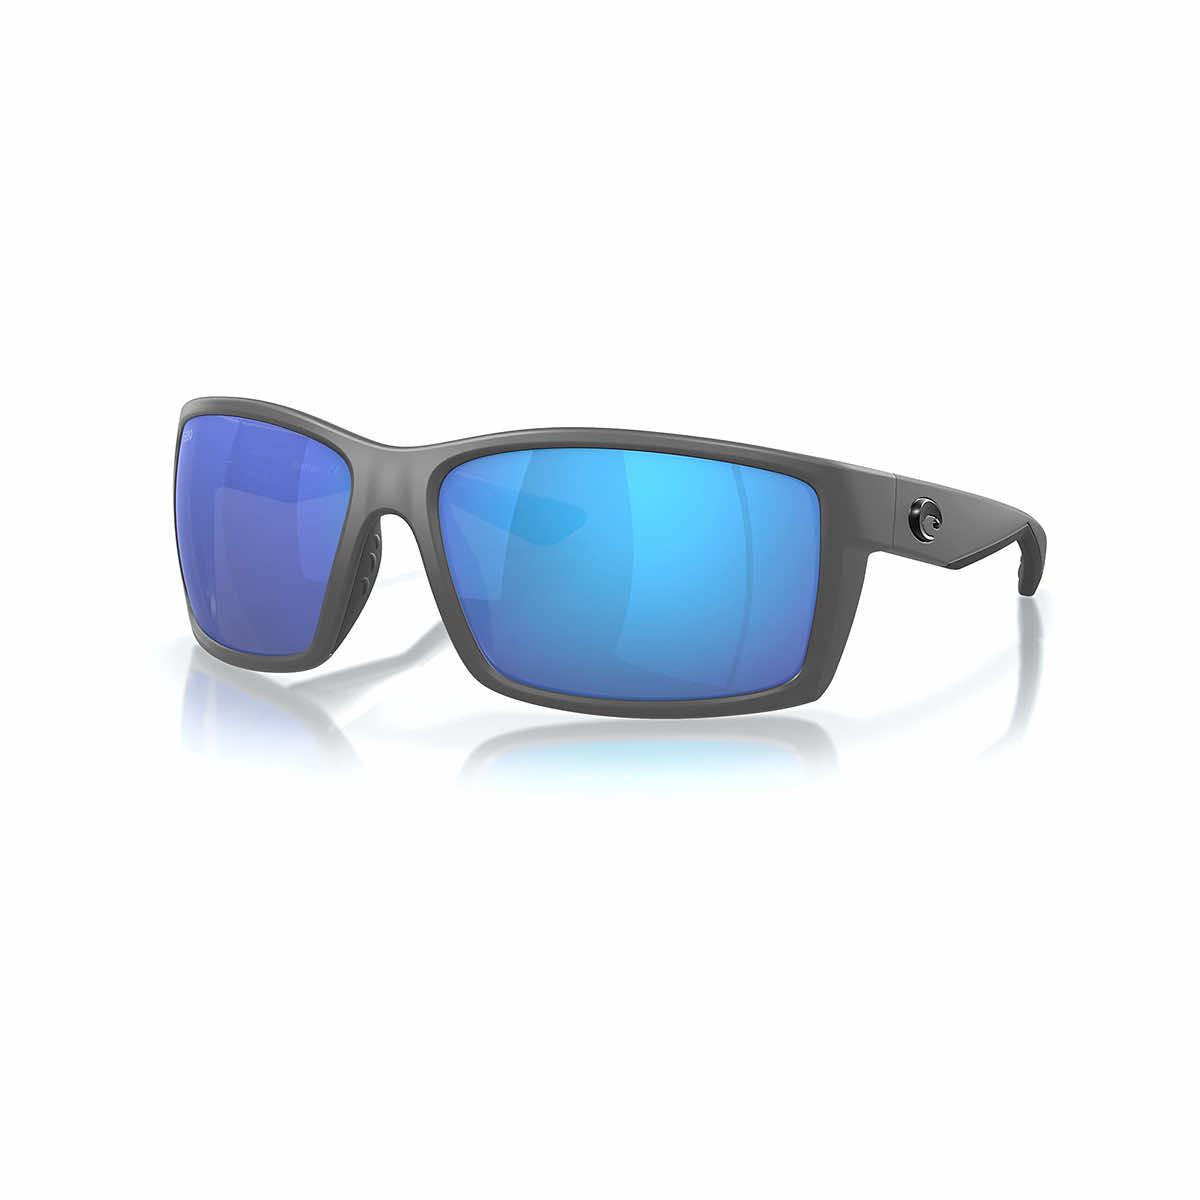  Reefton 580g Sunglasses - Polarized Glass